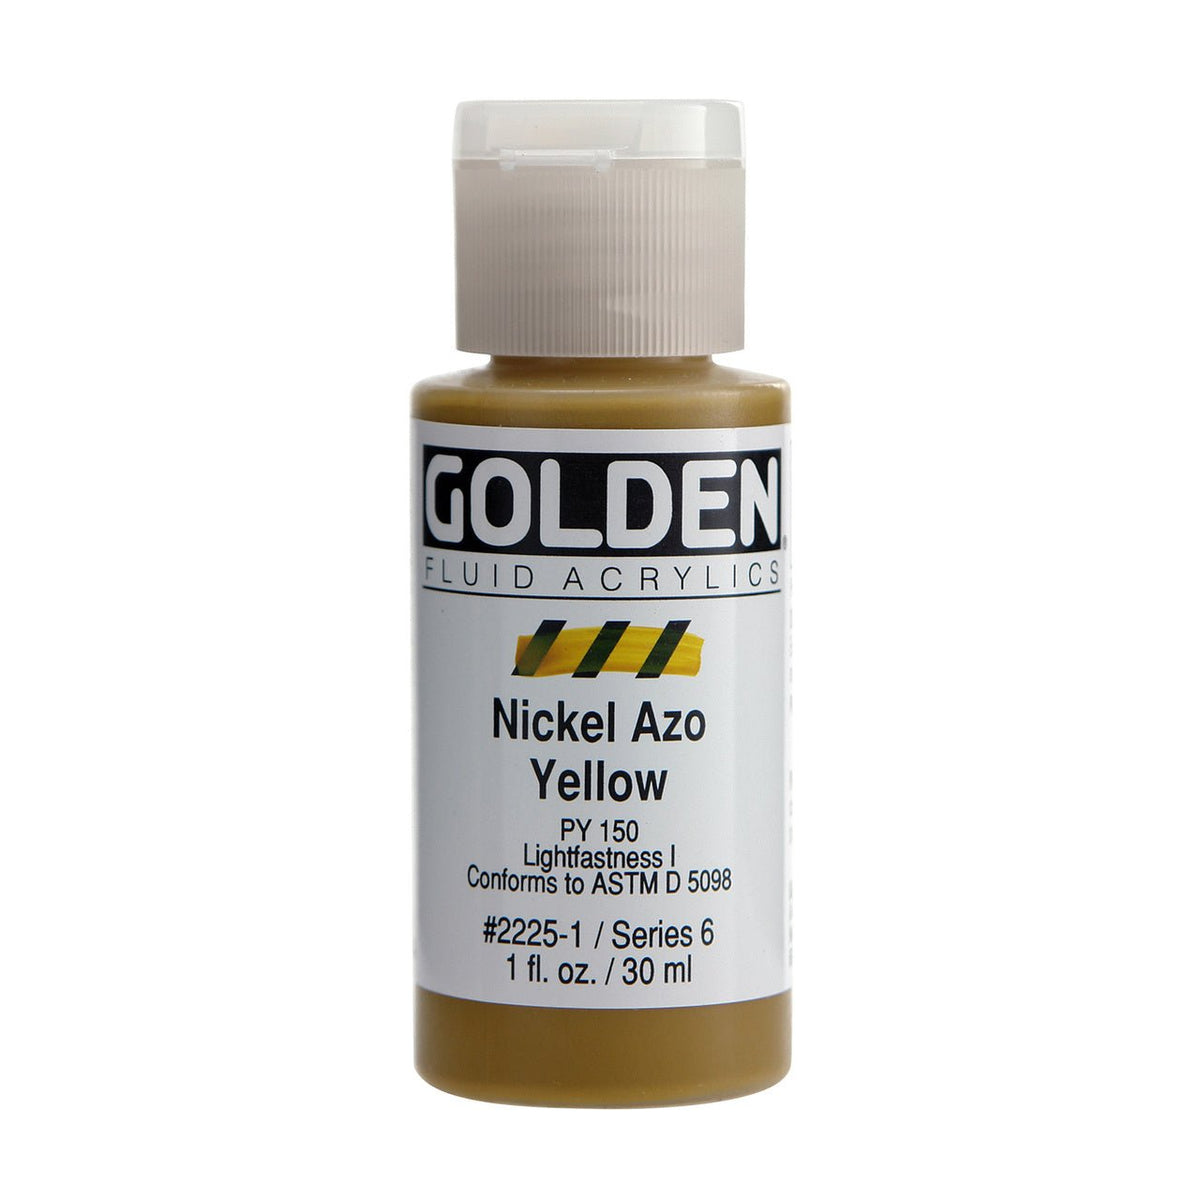 Golden Fluid Acrylic Nickel Azo Yellow 1 oz - merriartist.com